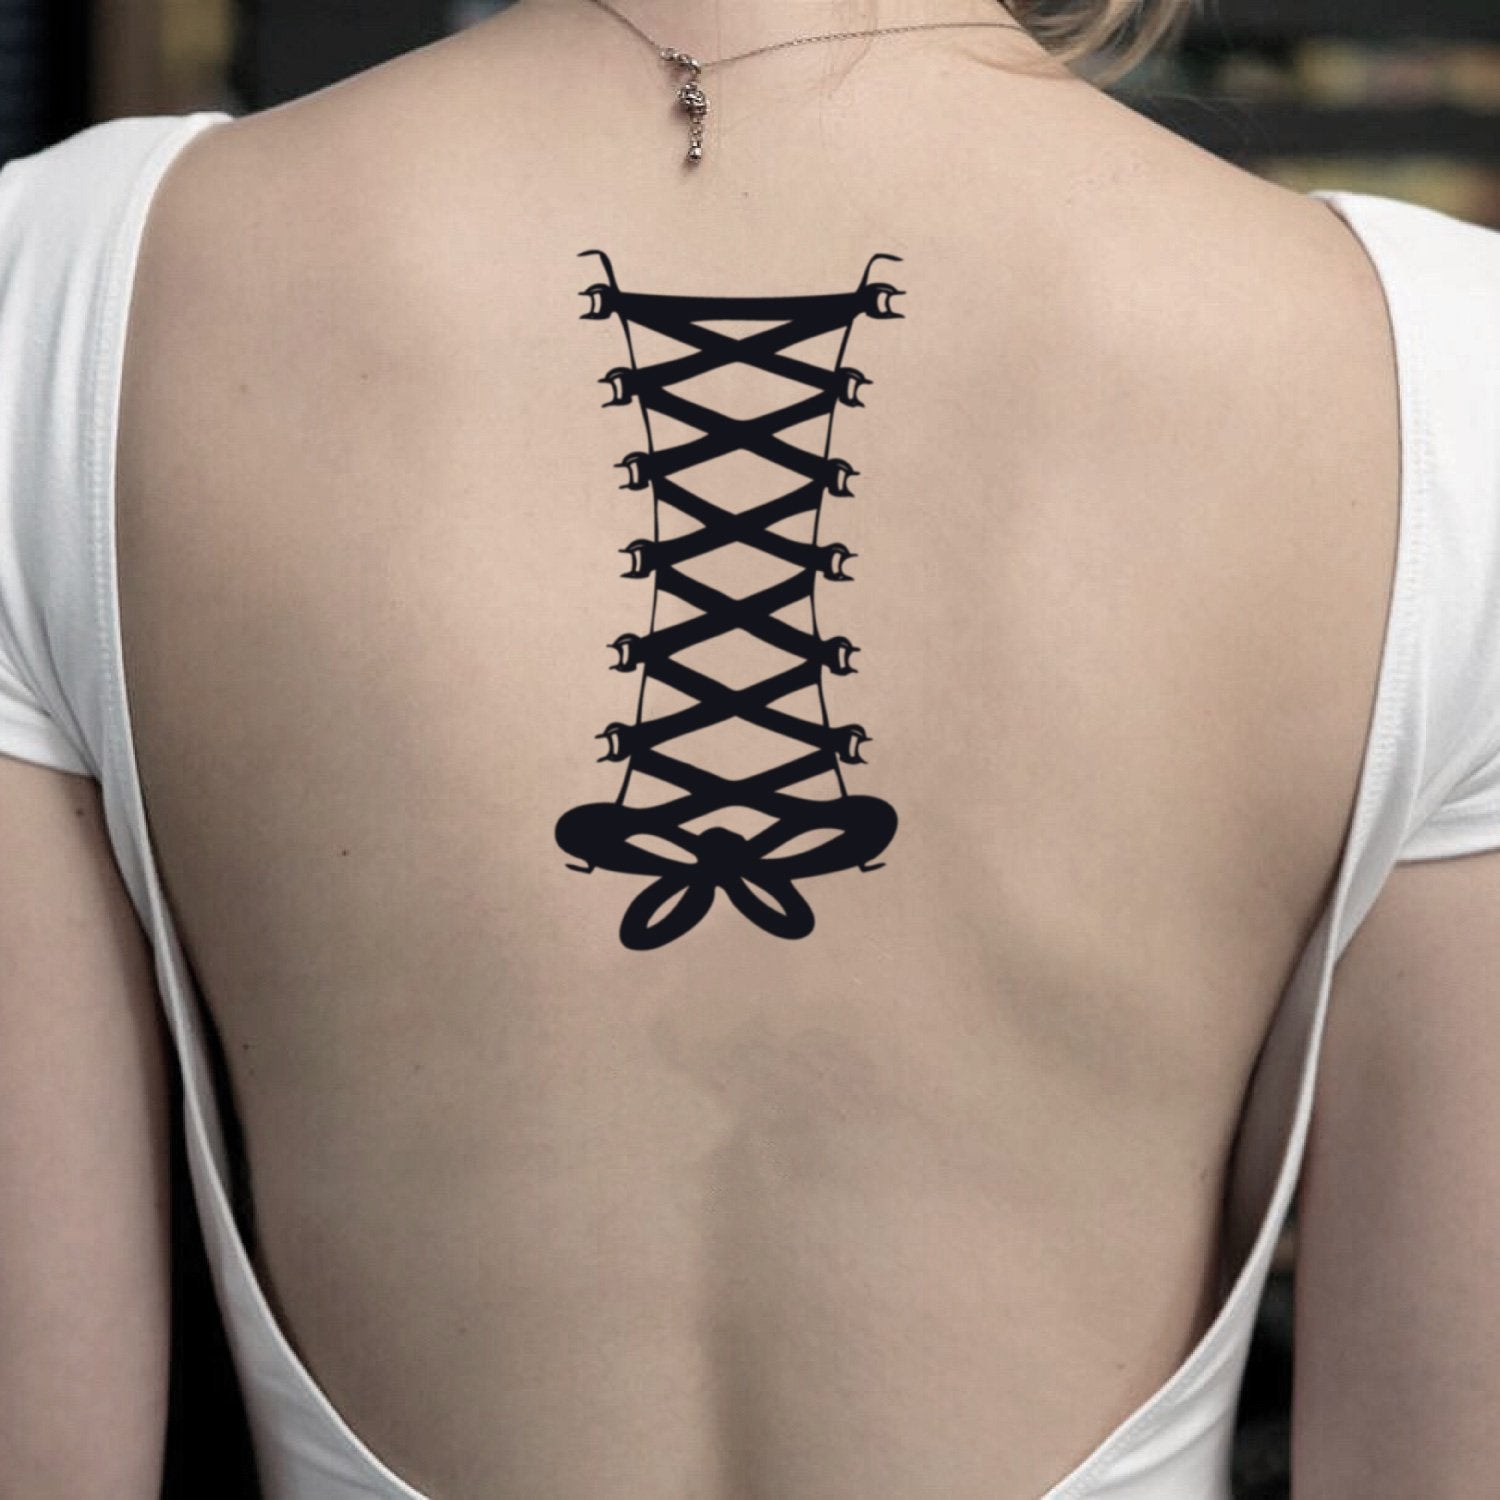 fake medium corset illustrative temporary tattoo sticker design idea on spine